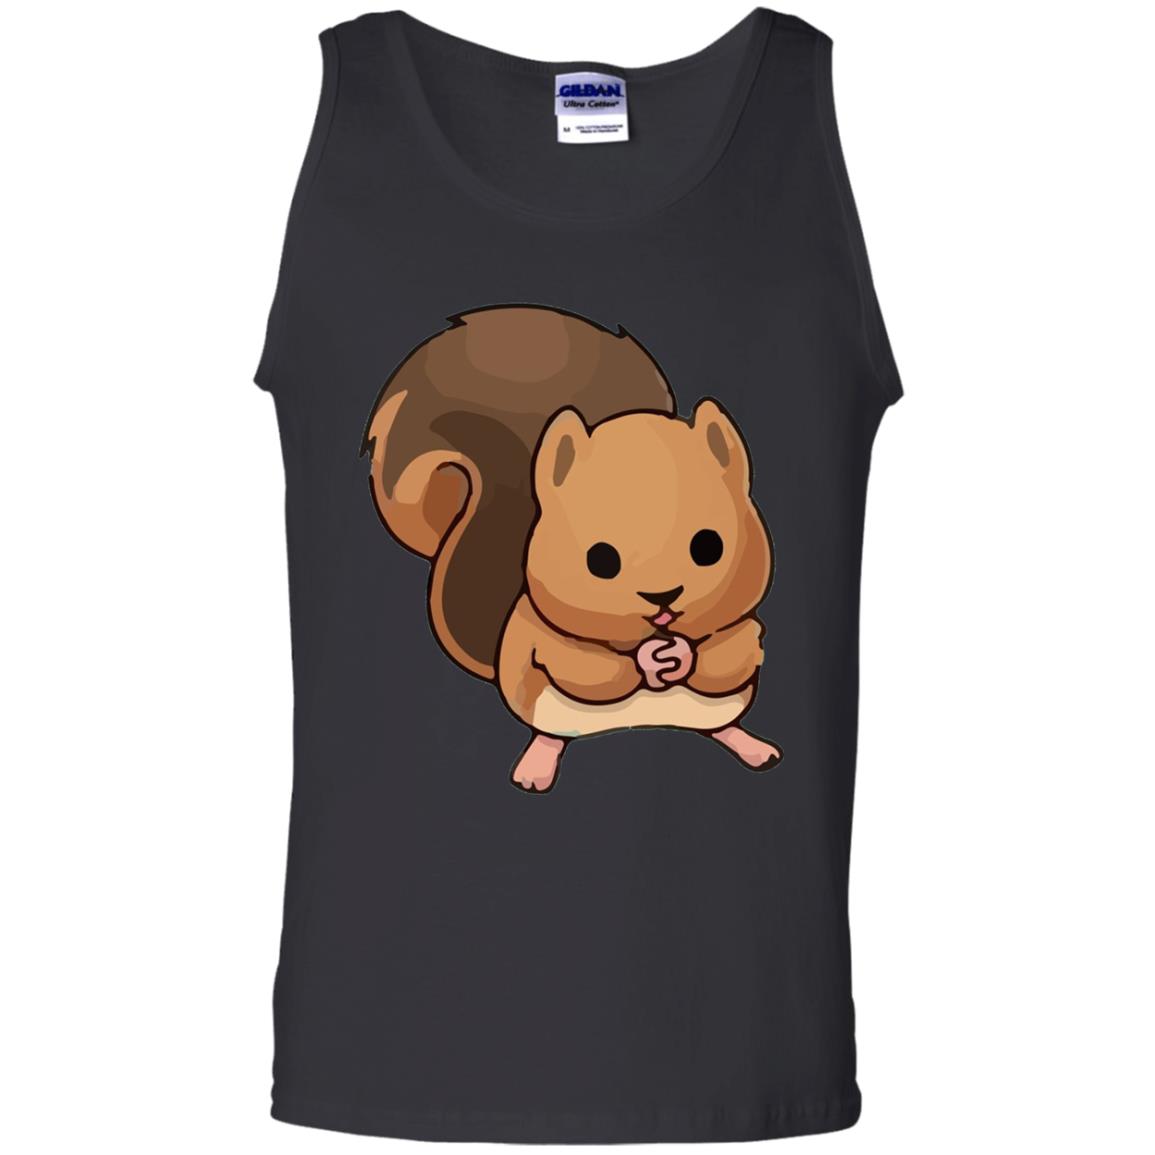 Cute Squirrel Graphic T-shirt